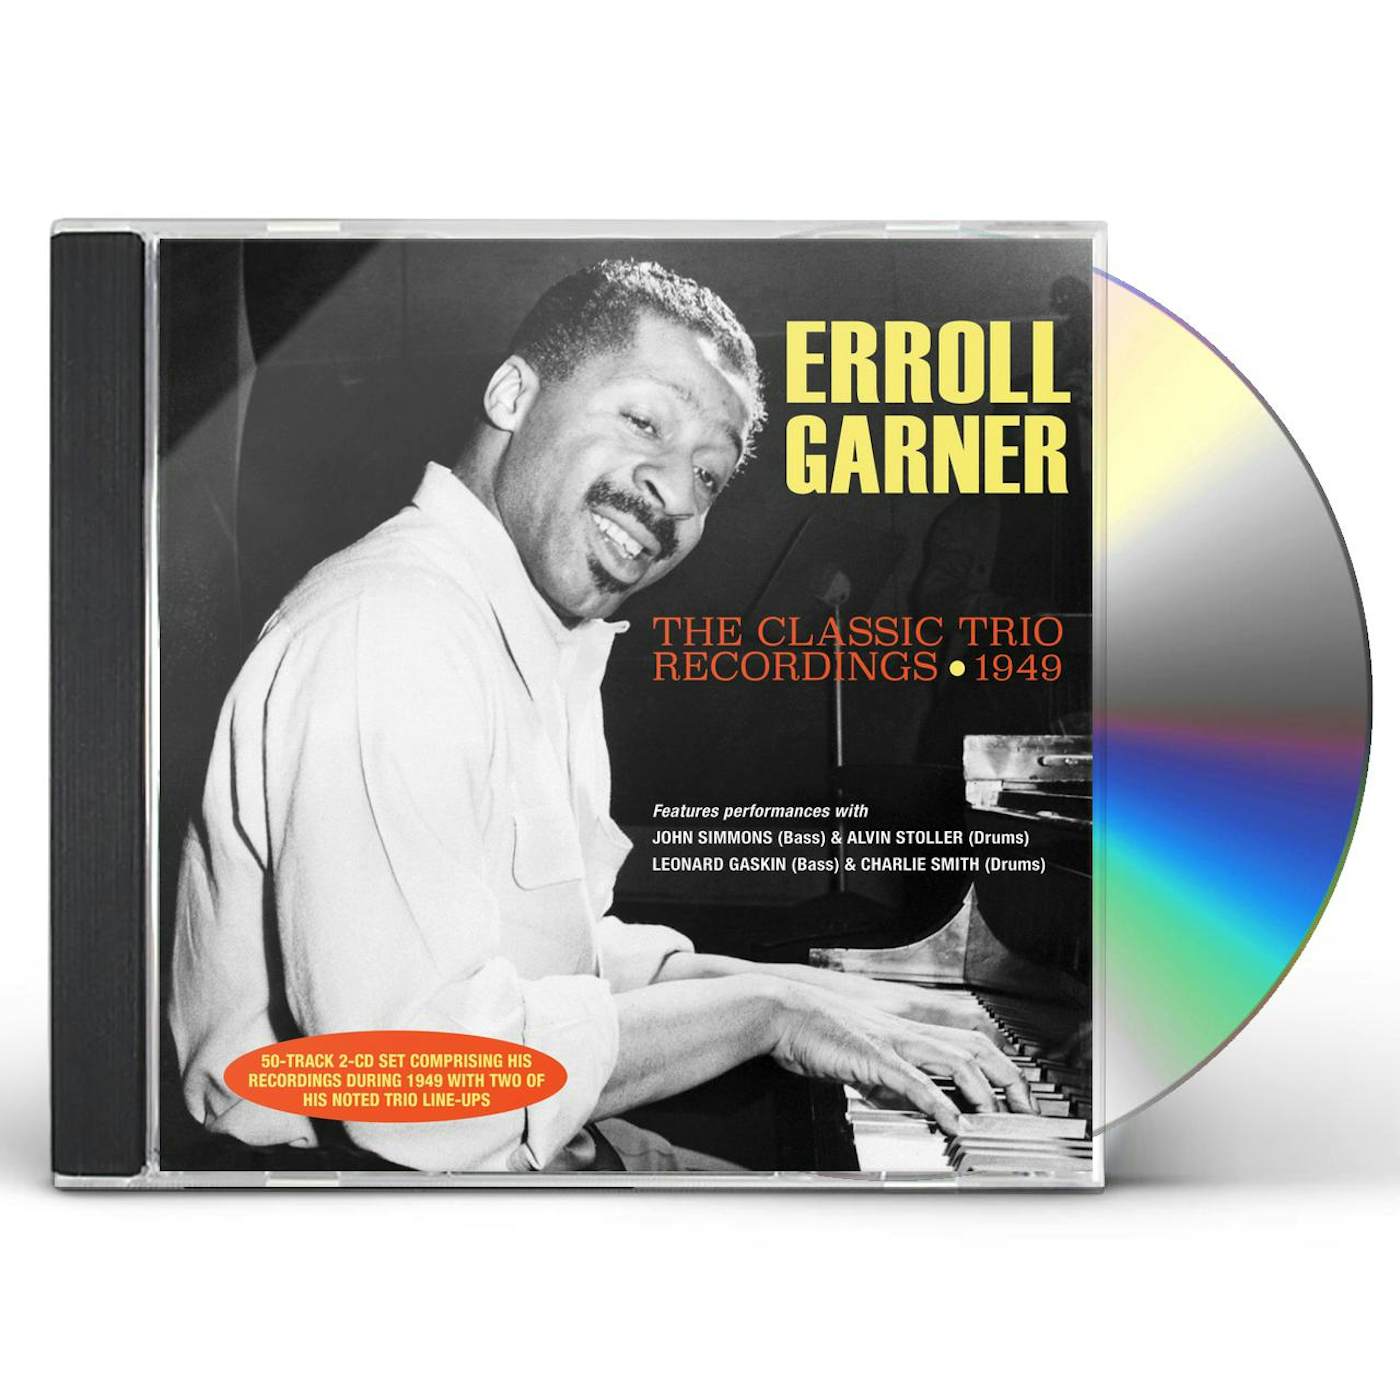 Erroll Garner CLASSIC TRIO RECORDINGS 1949 CD